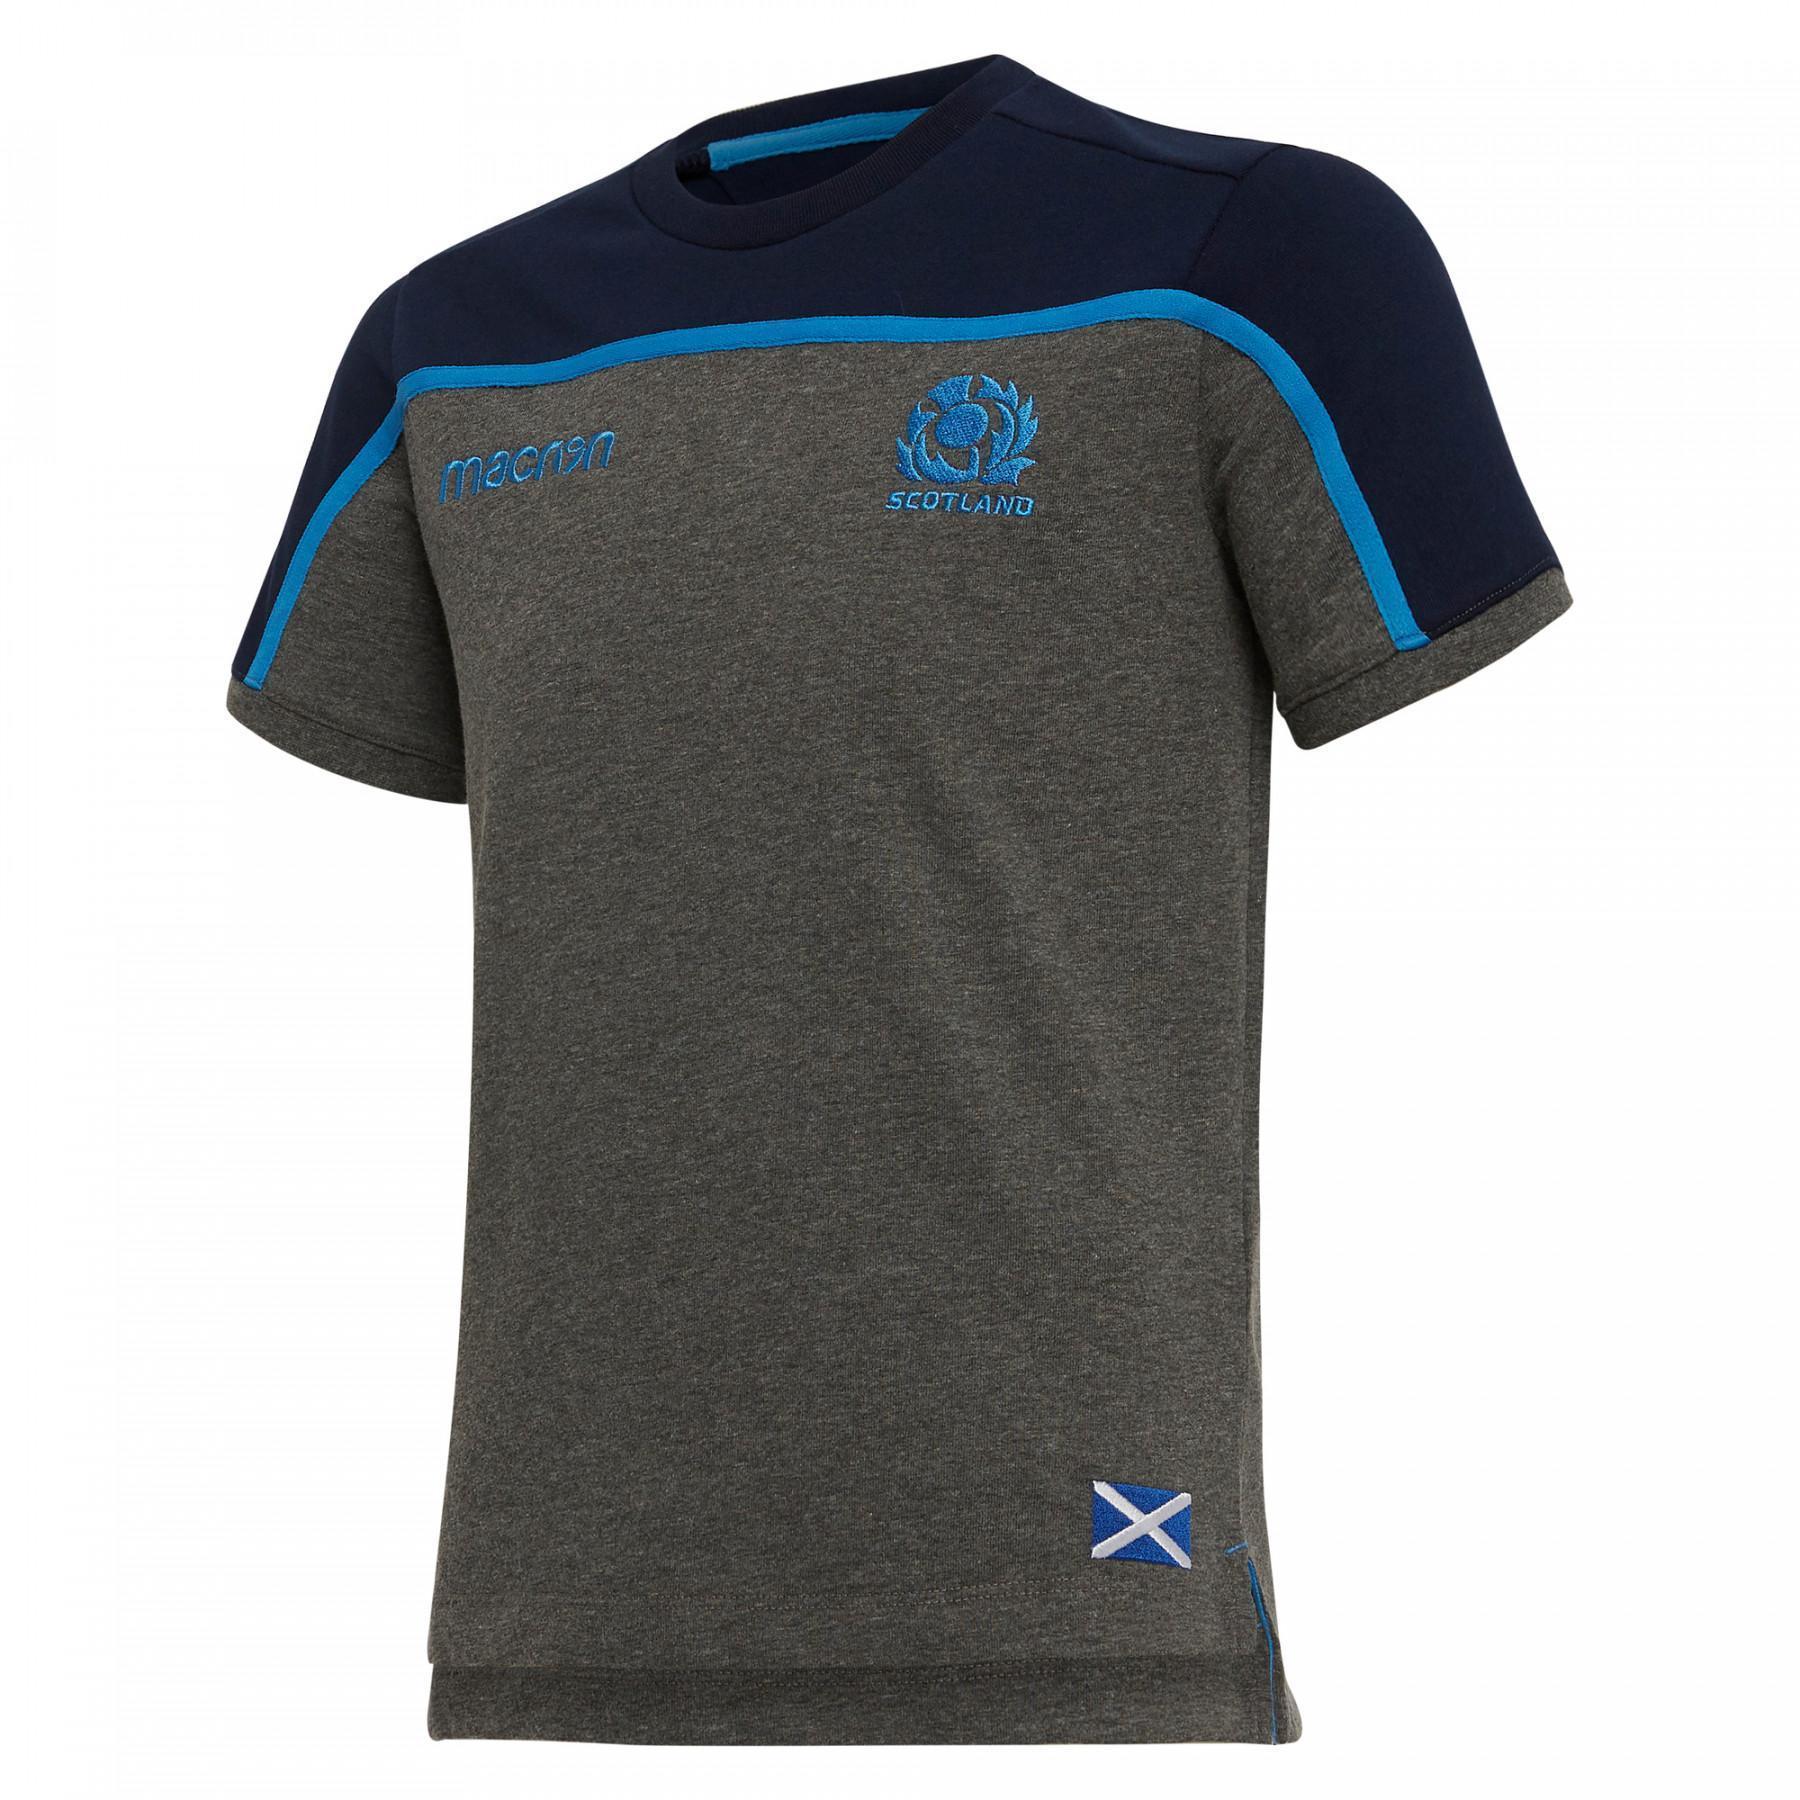 Kinder T-shirt Schotland 2018/19